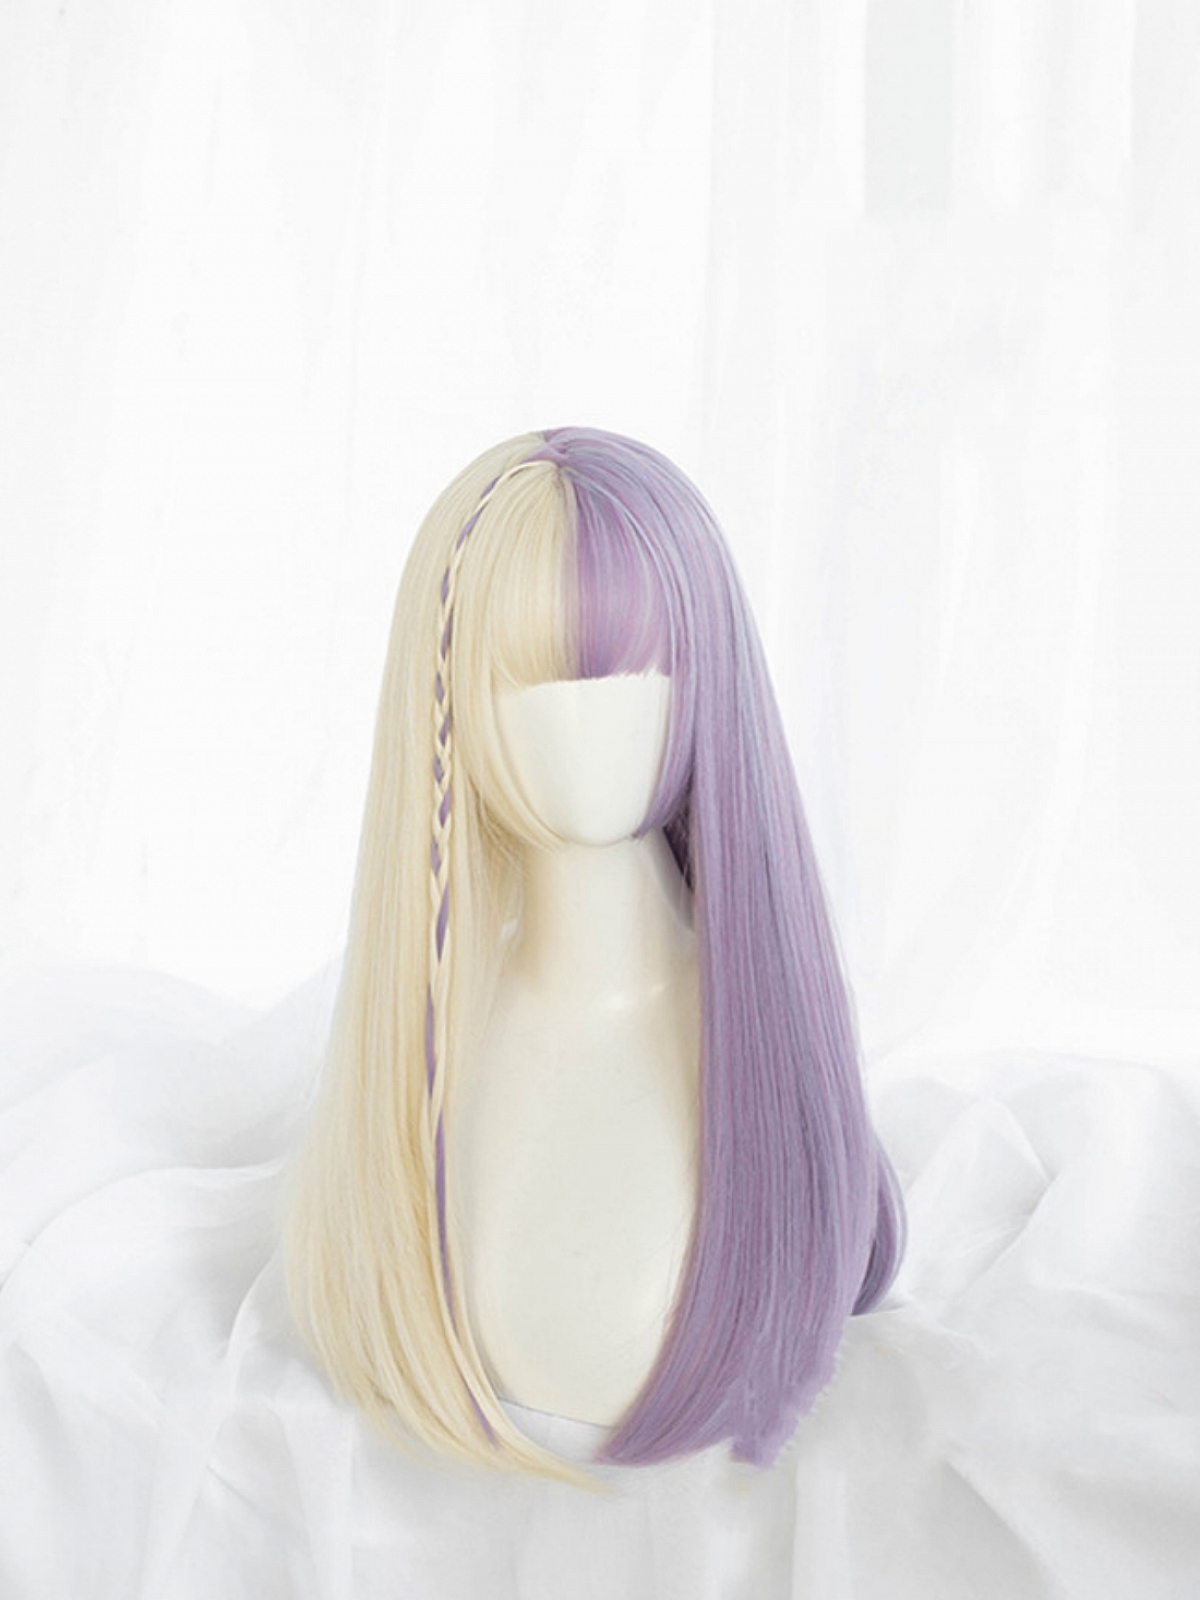 Evahair Lolita Half Purple And Half Blonde Long Straight Synthetic Wig With Bangs Home Evahair